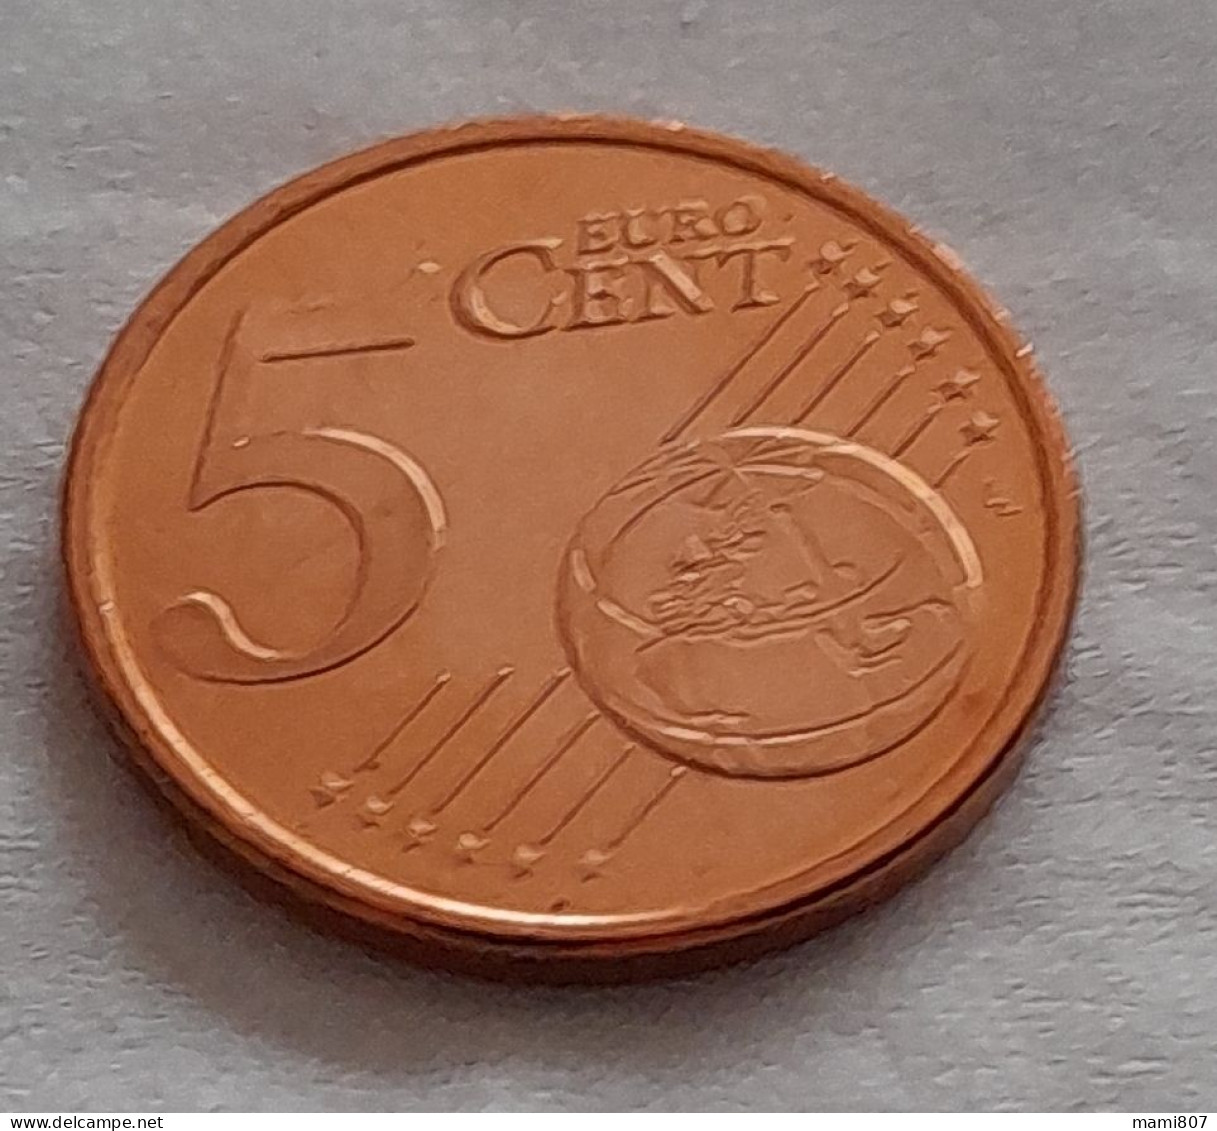 IRLANDE - 5 Cme EURO 2002 - SUP - Irland